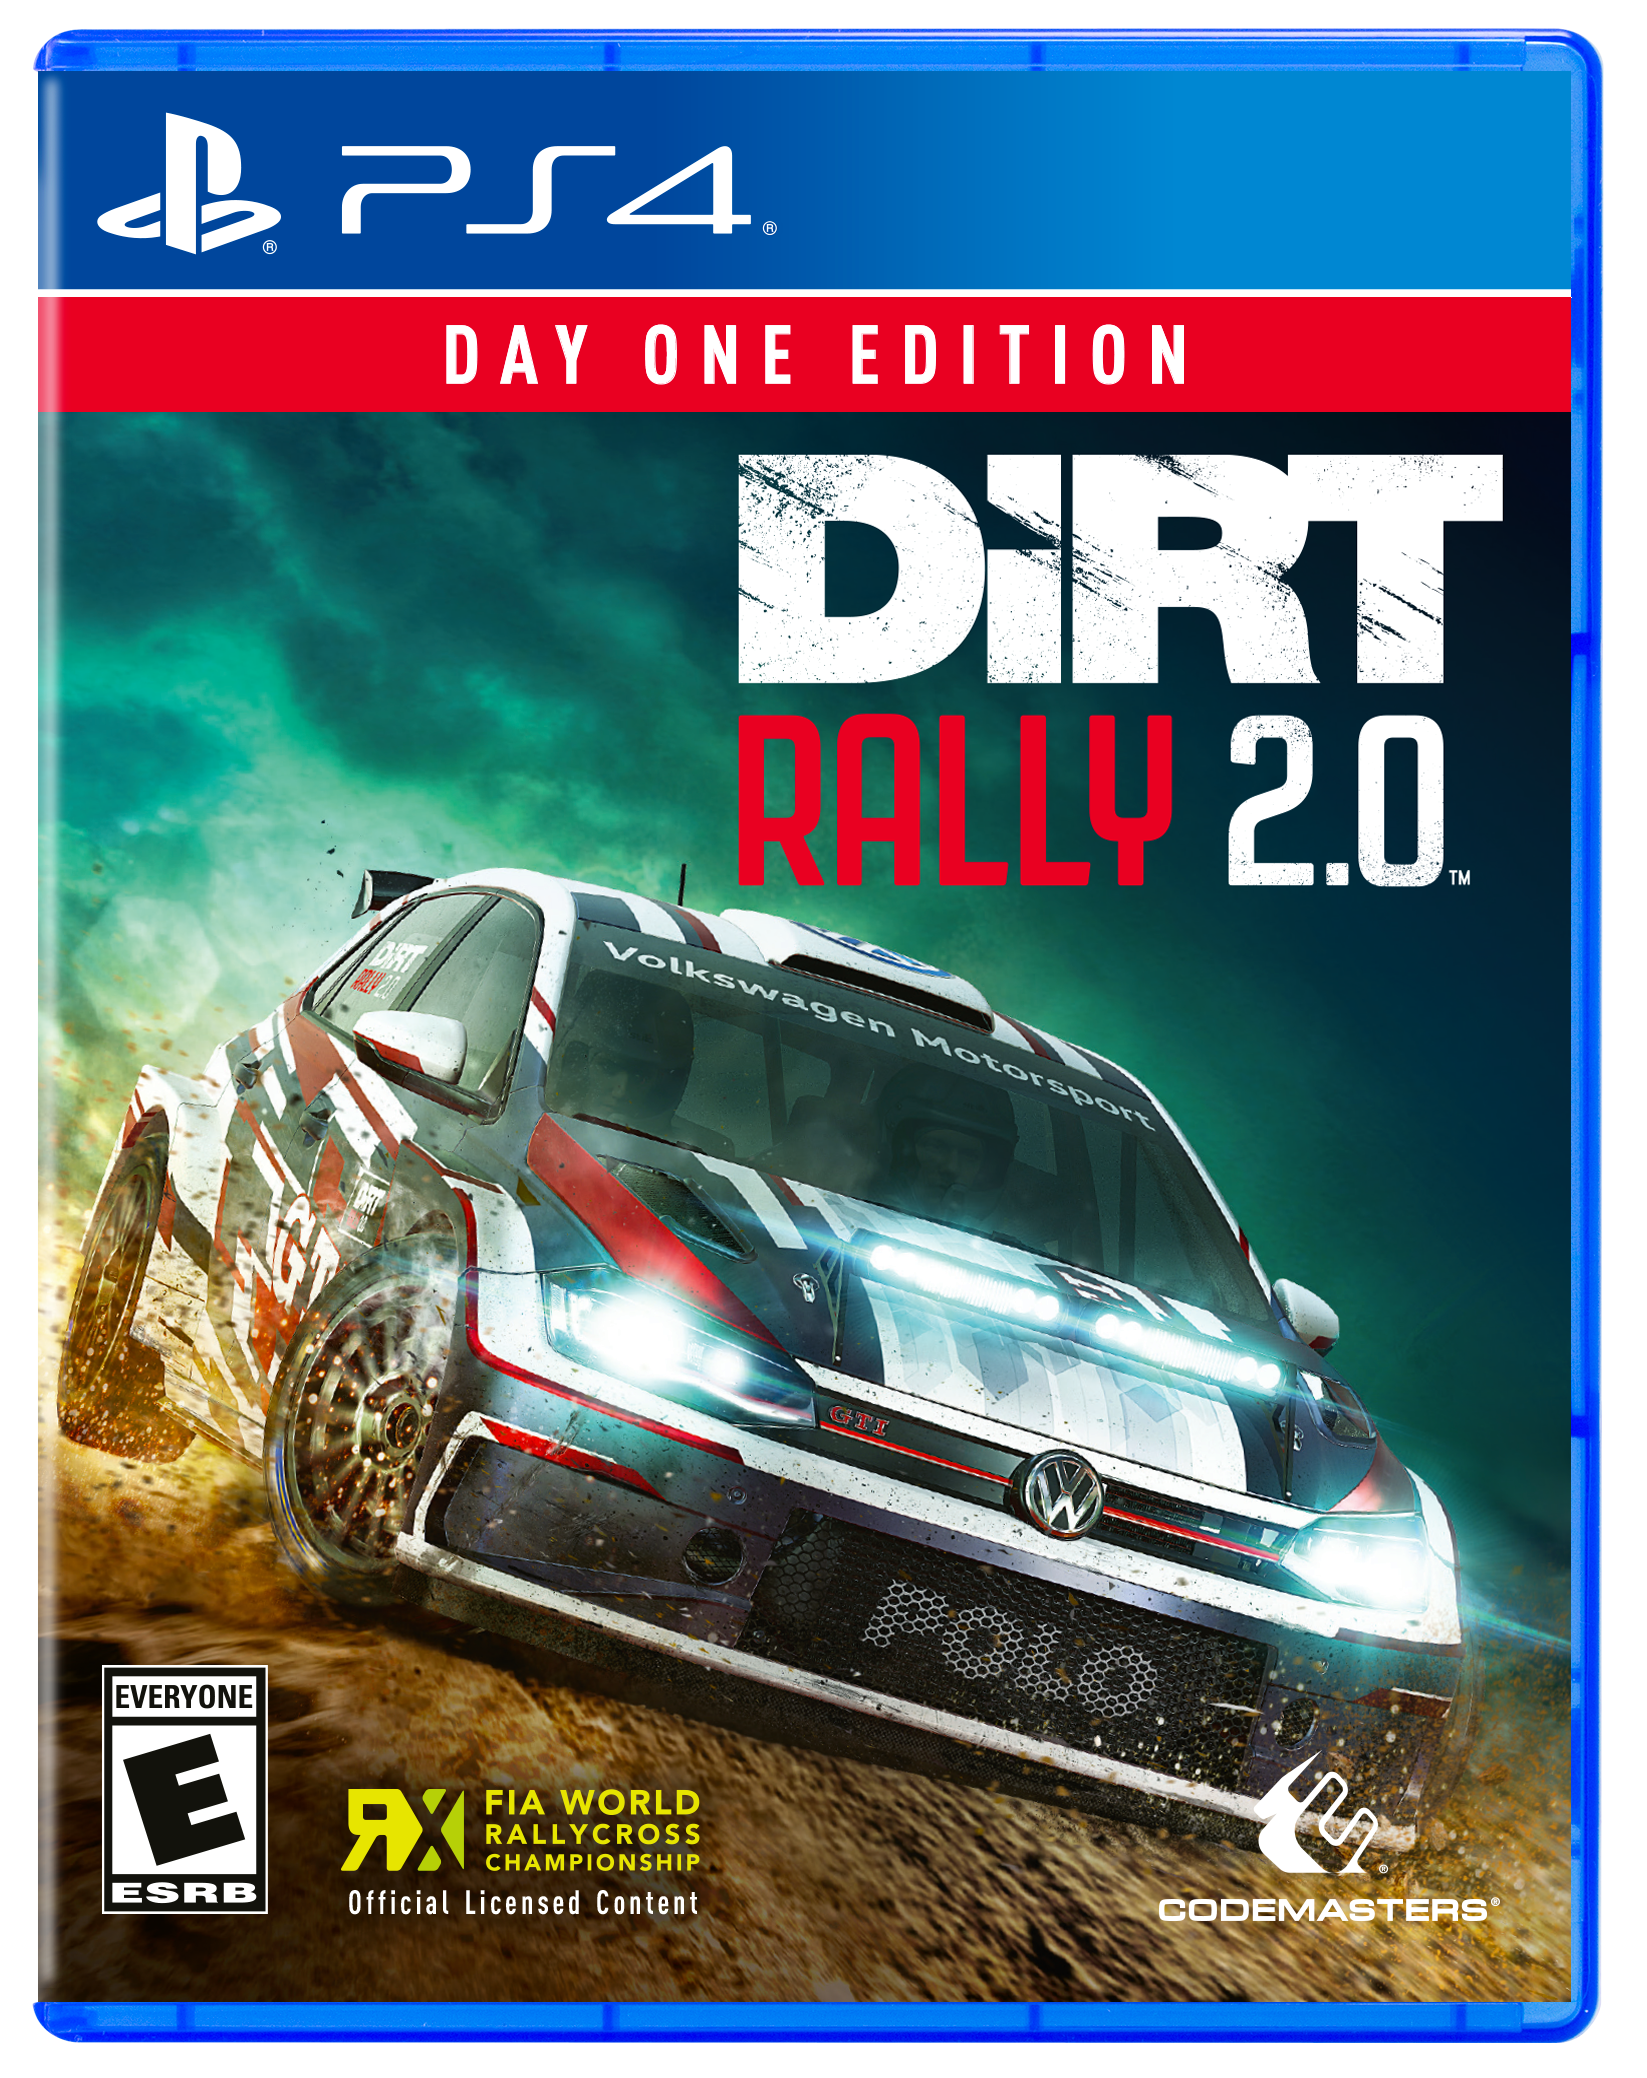 Guida / Racing PS4 Playstation 4 CODEMASTERS Codemasters Dirt Rally 2.0 Day One Edition 